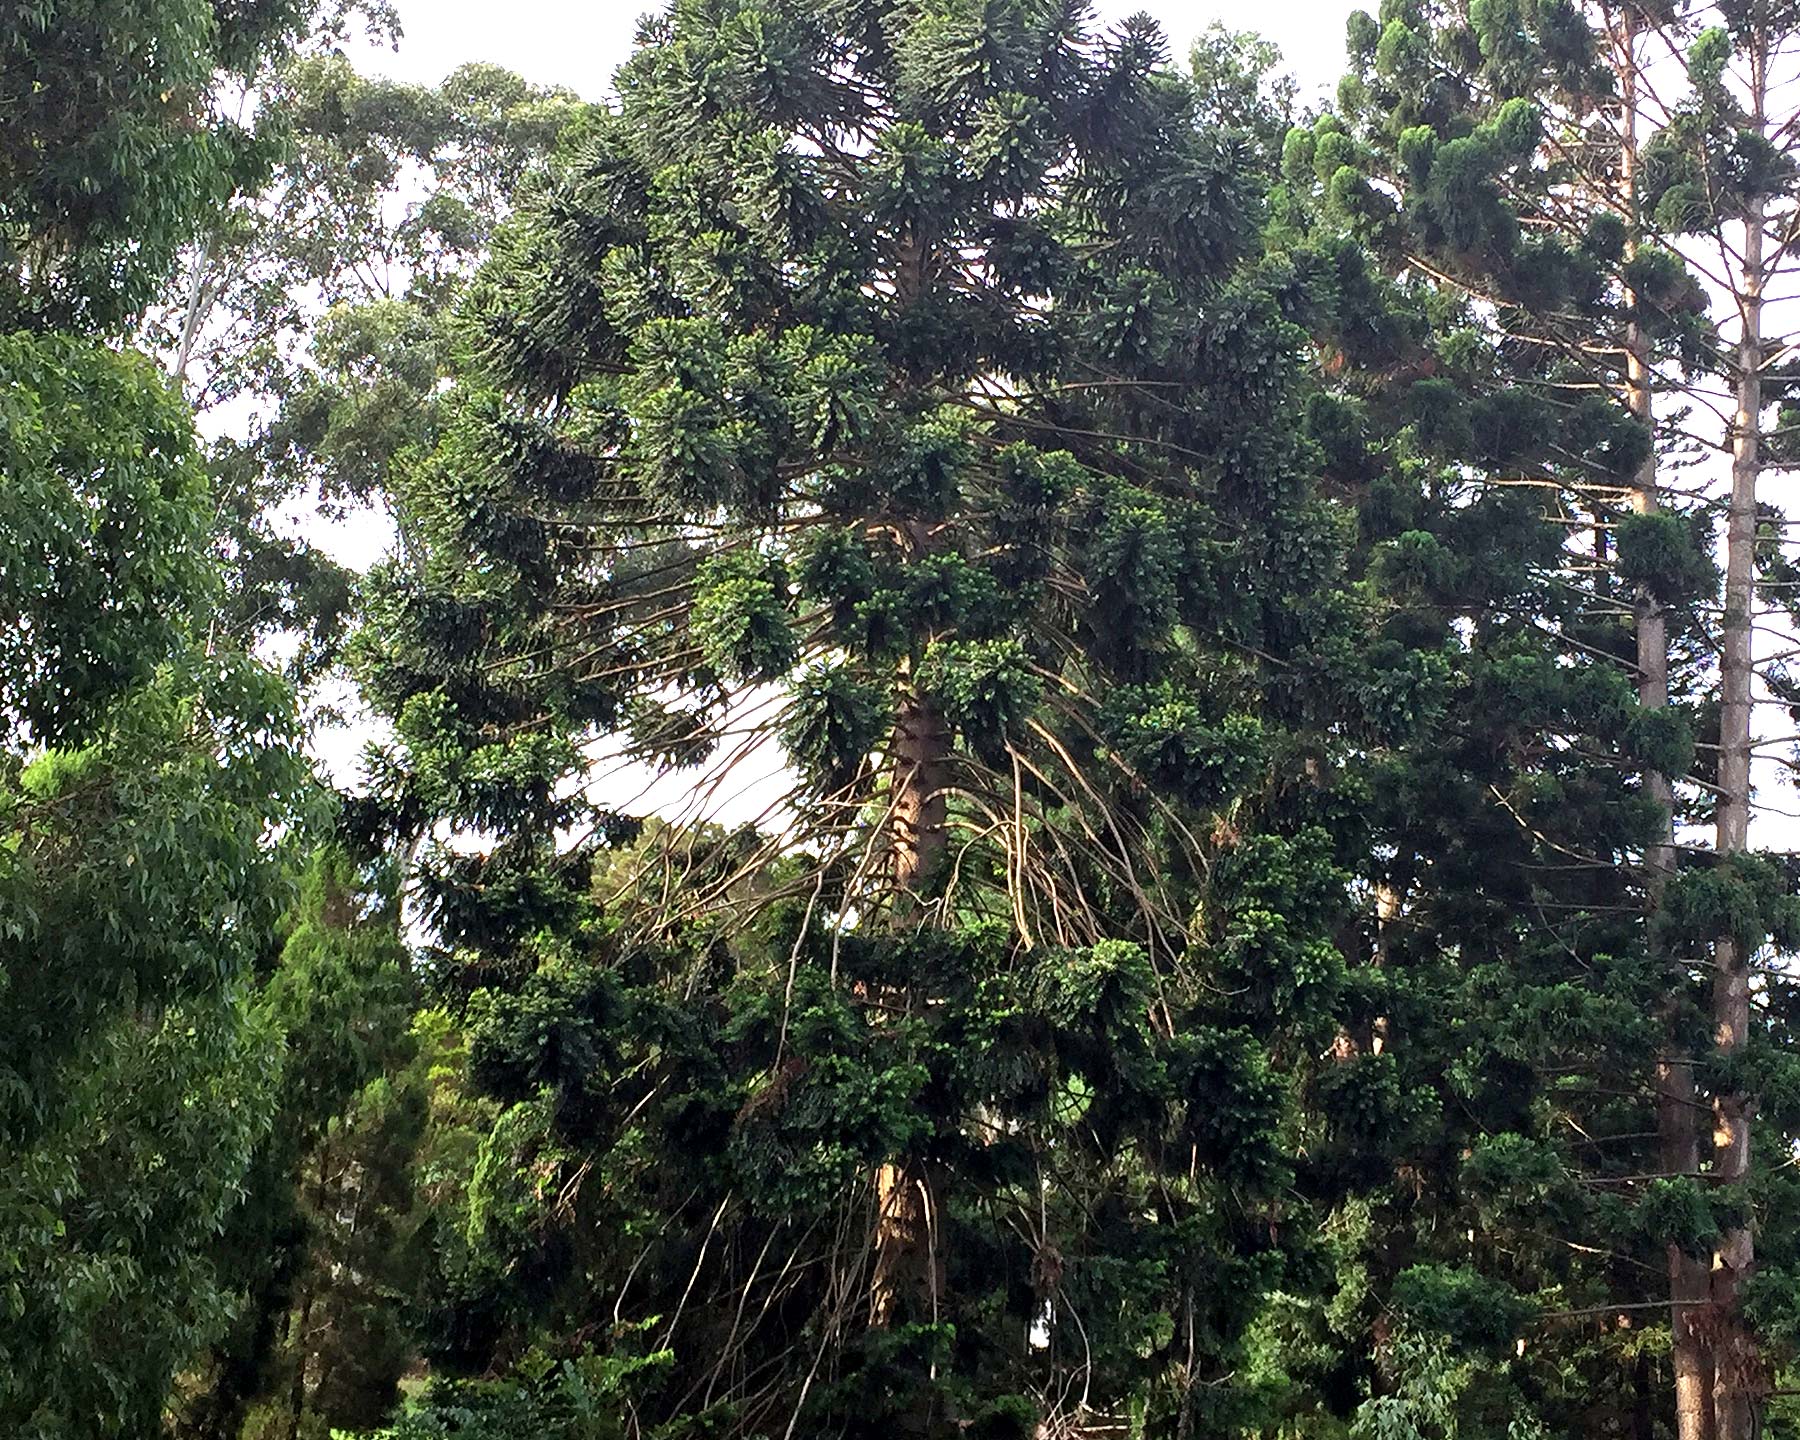 Araucaria bidwillii Bunya Bunya Pine - distinctive branching from trunk